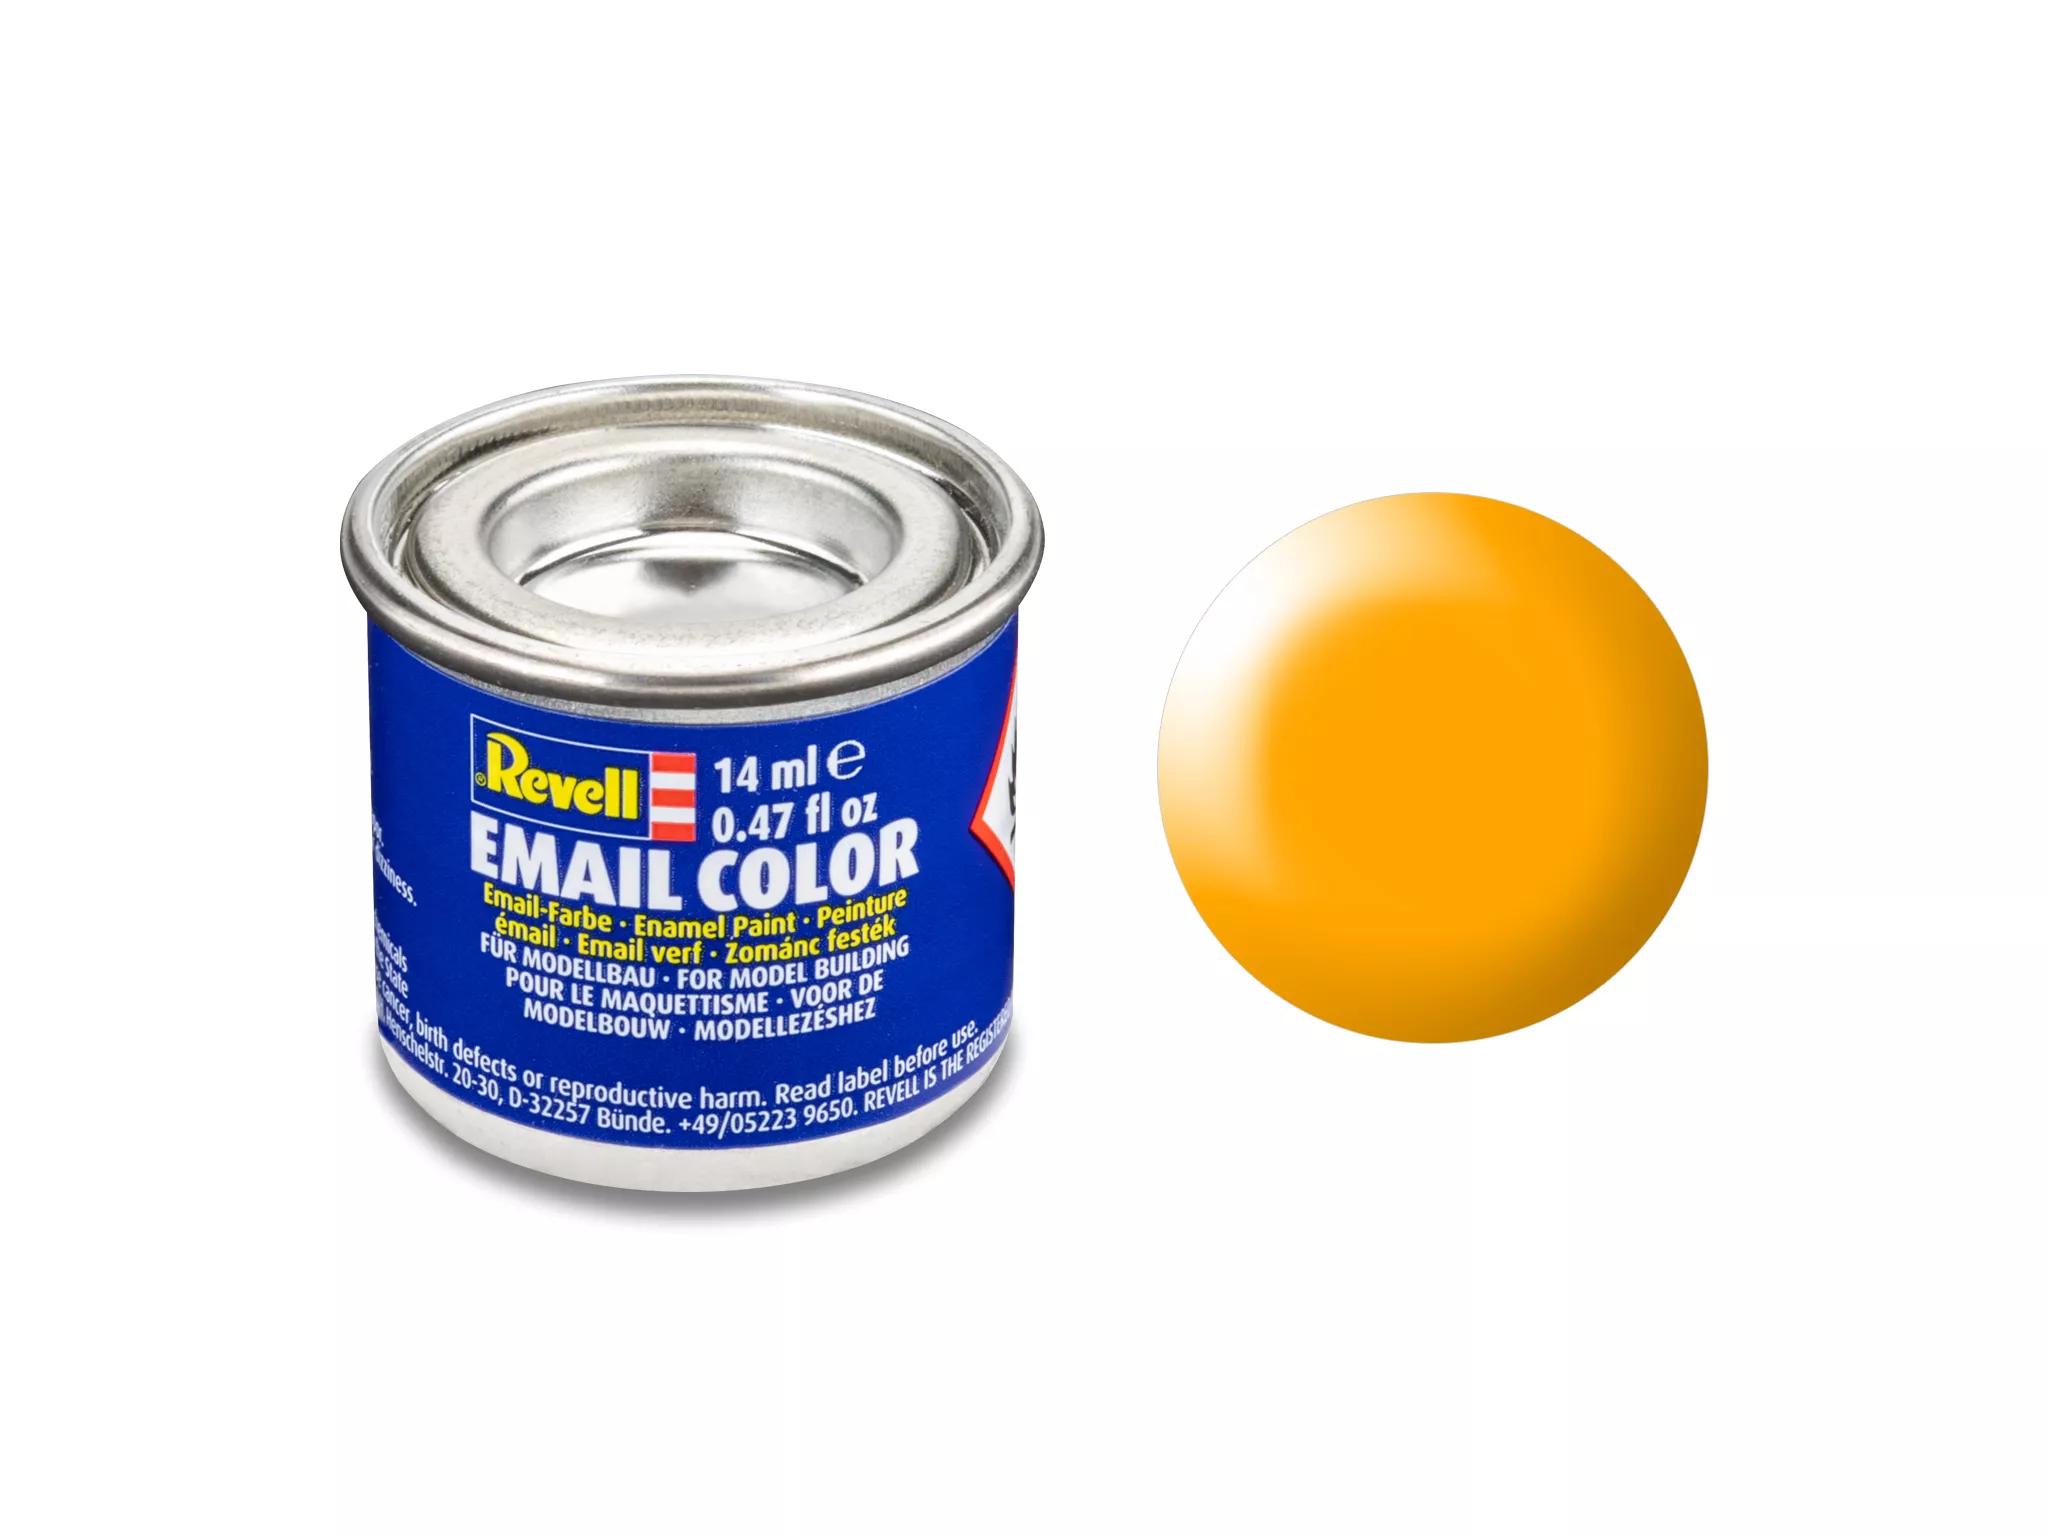 Revell 32310 lufthansa-gelb, seidenmatt RAL 1028 14 ml-Dose Revell Modellbau-Farbe auf Kunstharzbasis